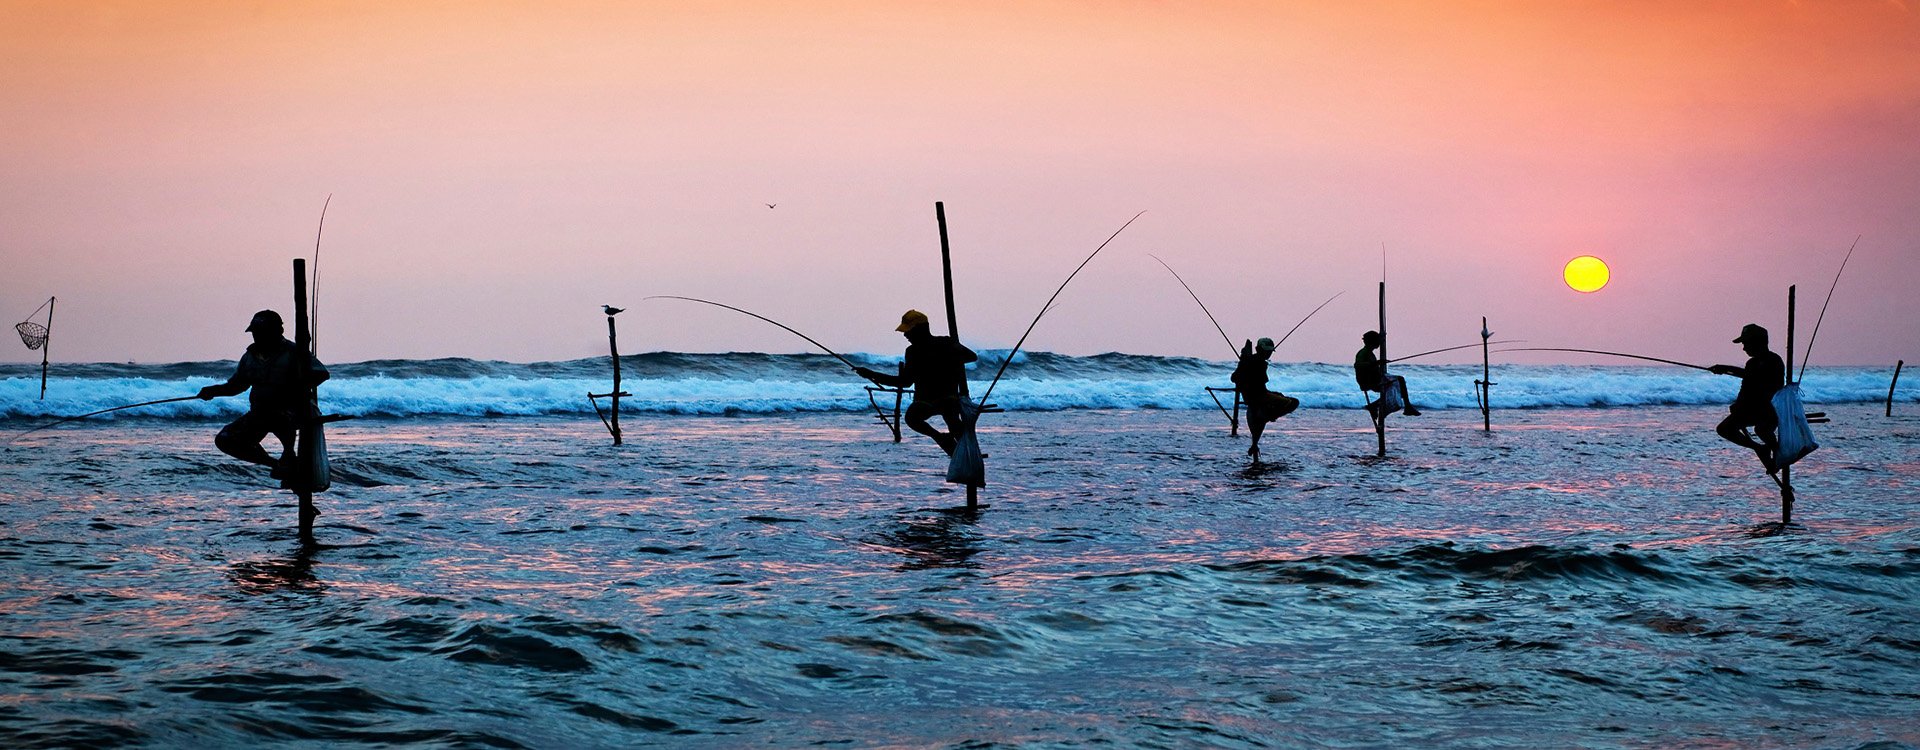 Sri Lanka_GALLE_stilt fishing_iStock_000062744030